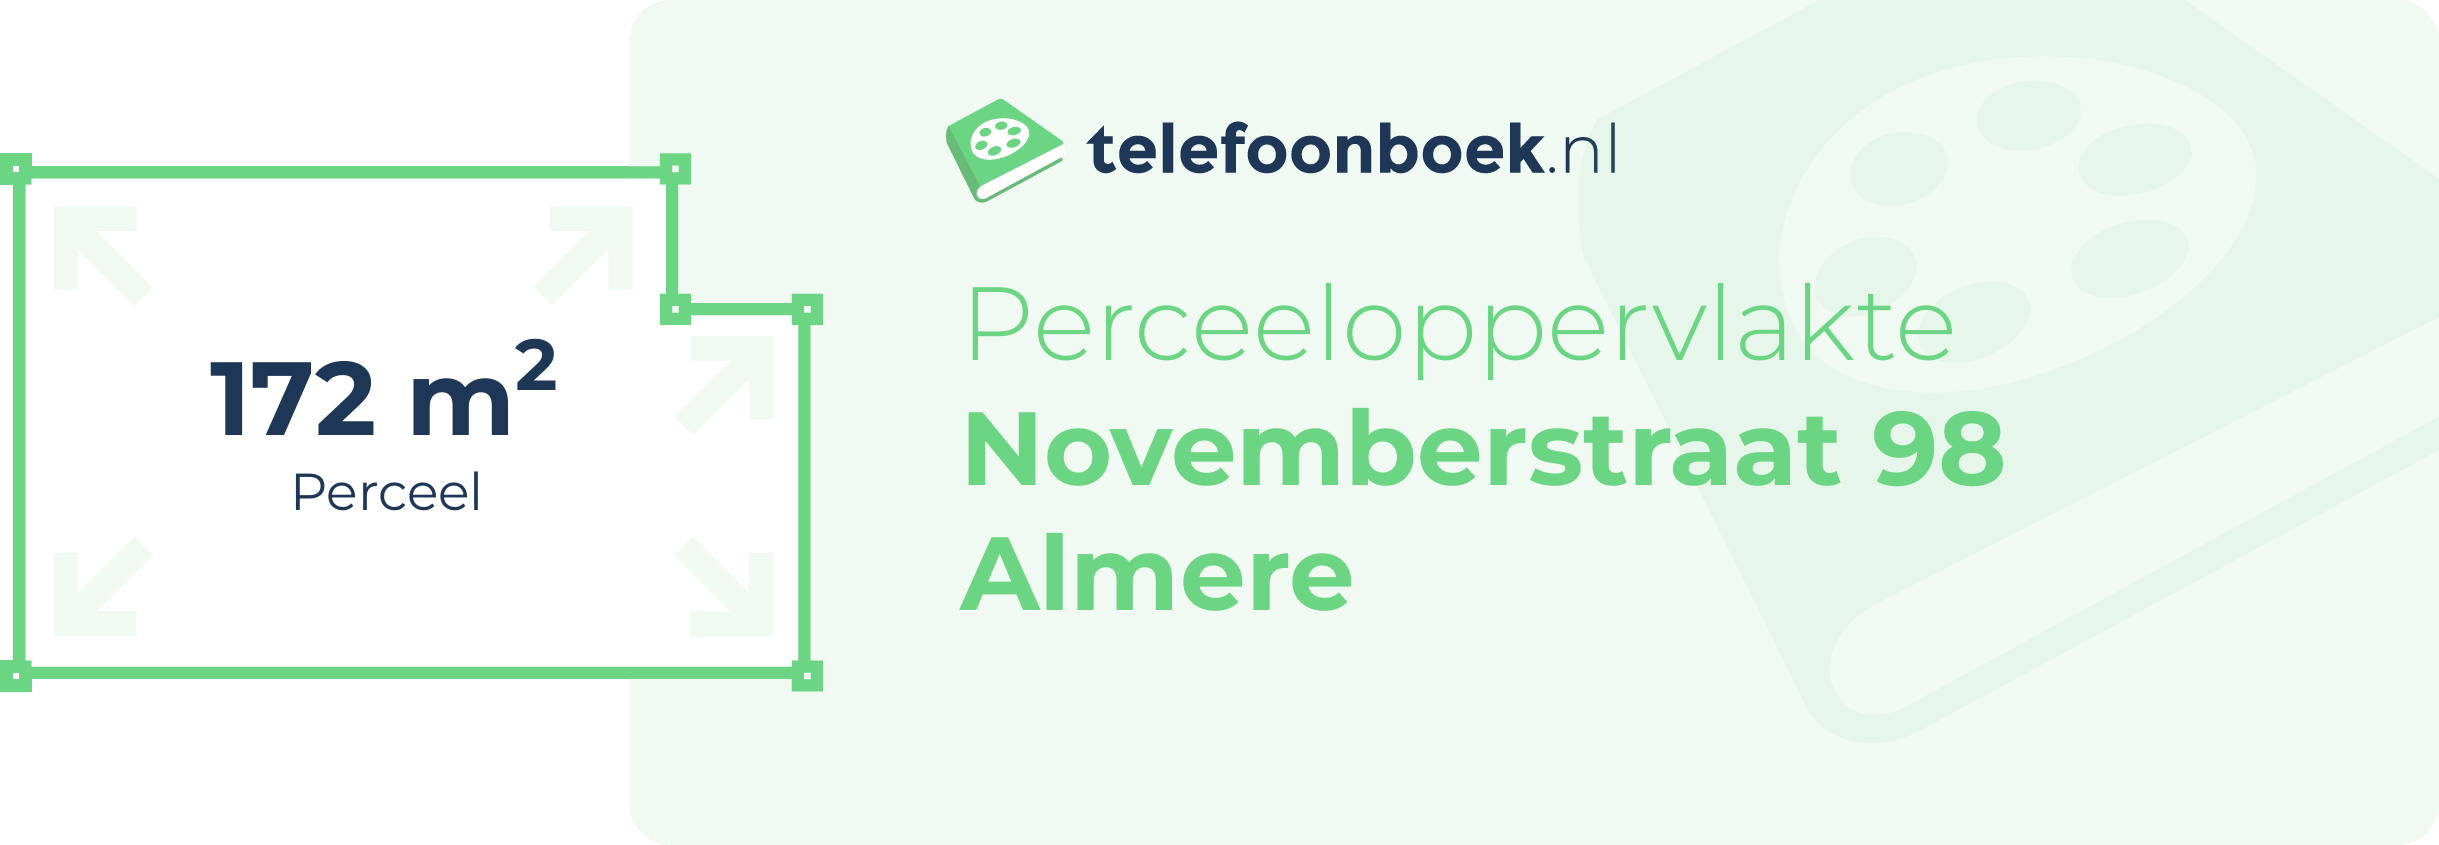 Perceeloppervlakte Novemberstraat 98 Almere